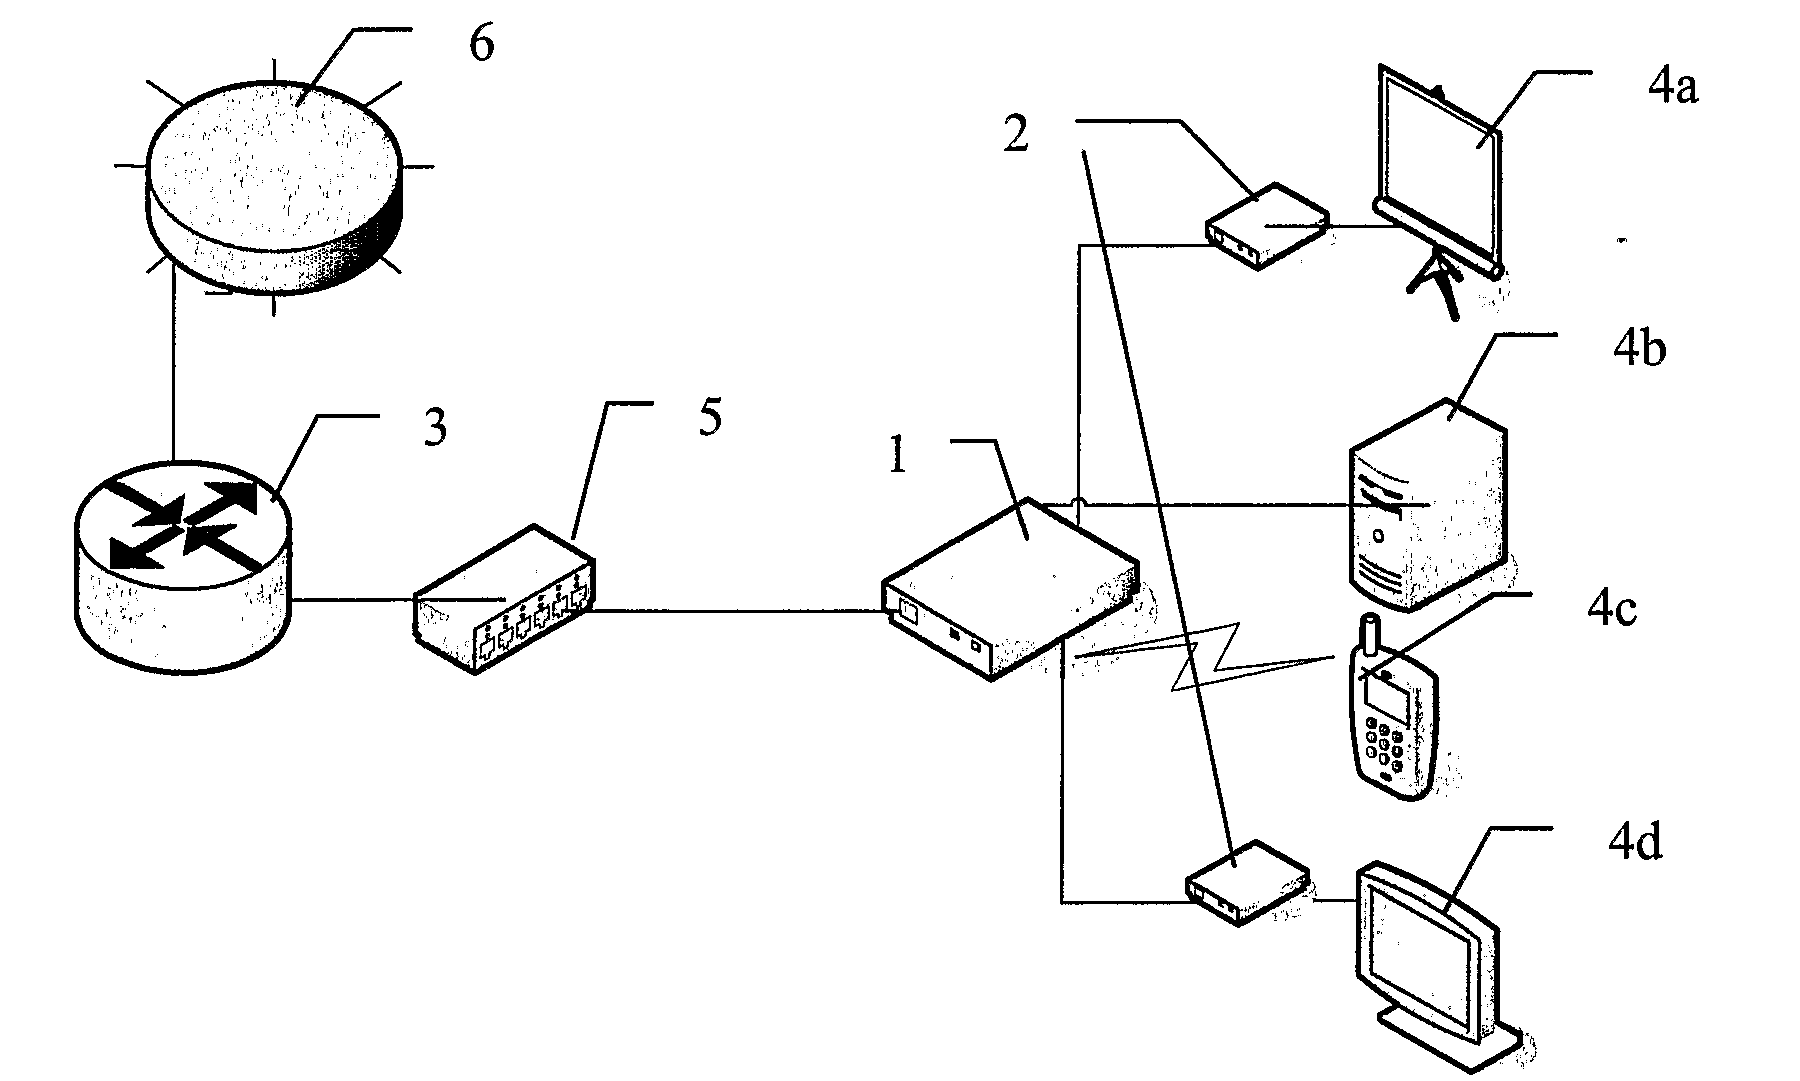 System and method for bandwidth handling